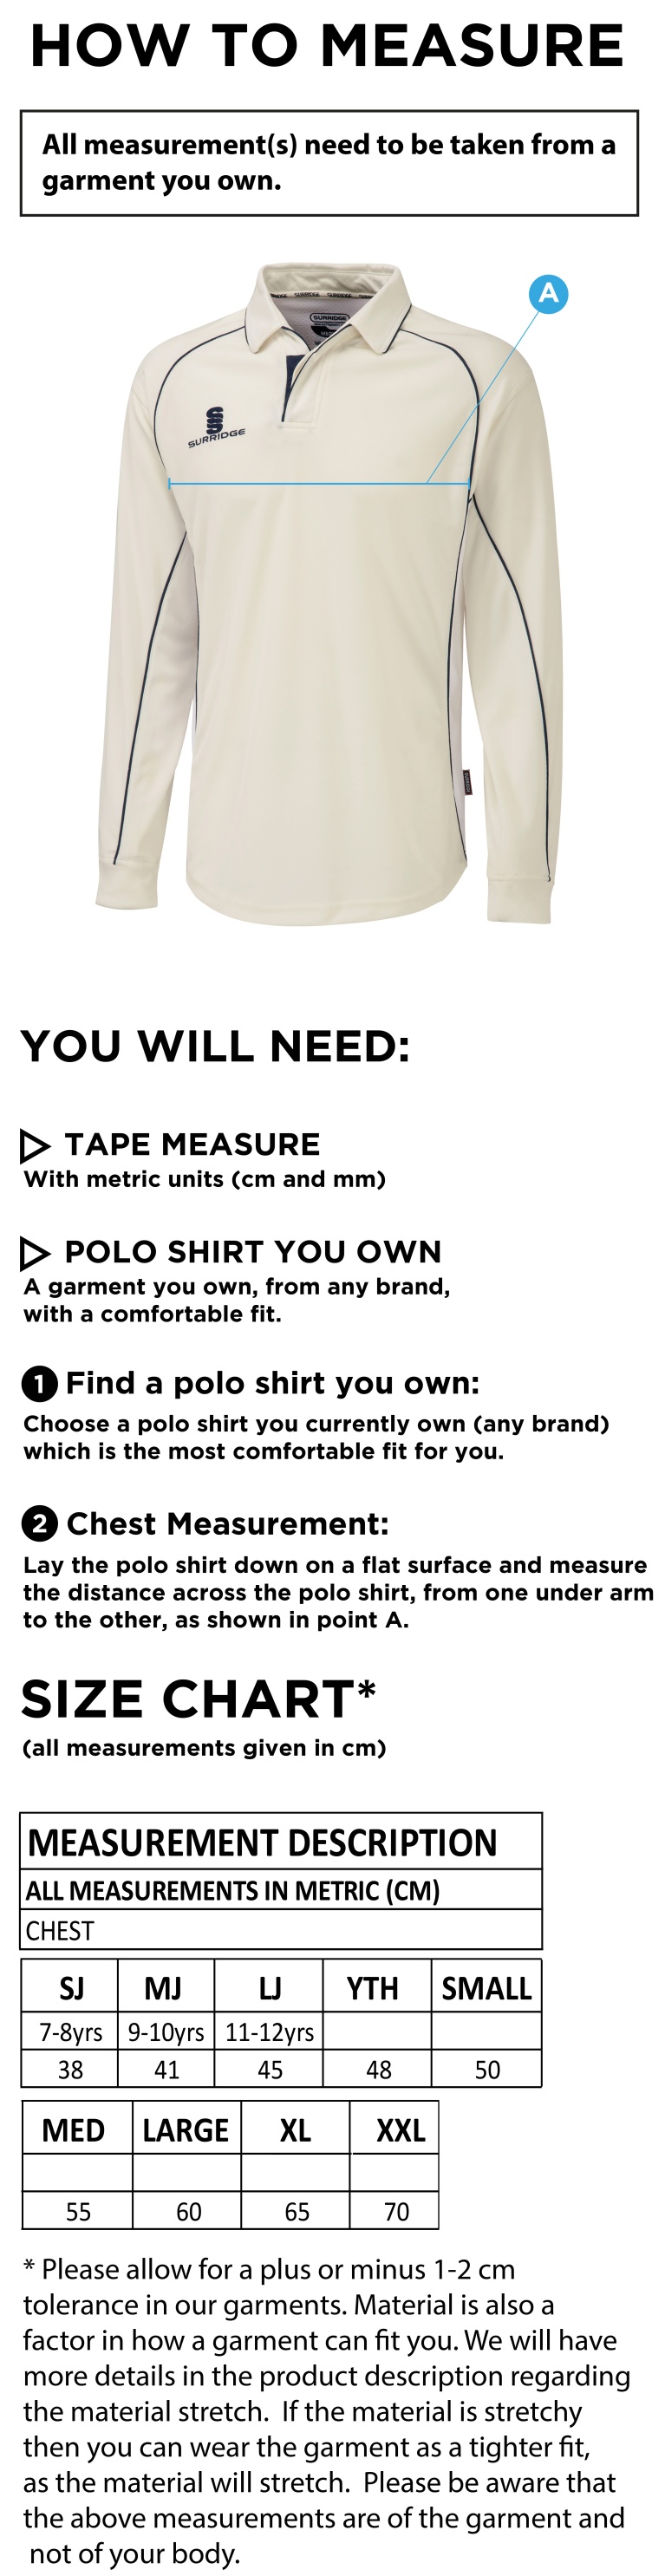 Stockport Trinity CC - Long Sleeve Premier shirt - Size Guide